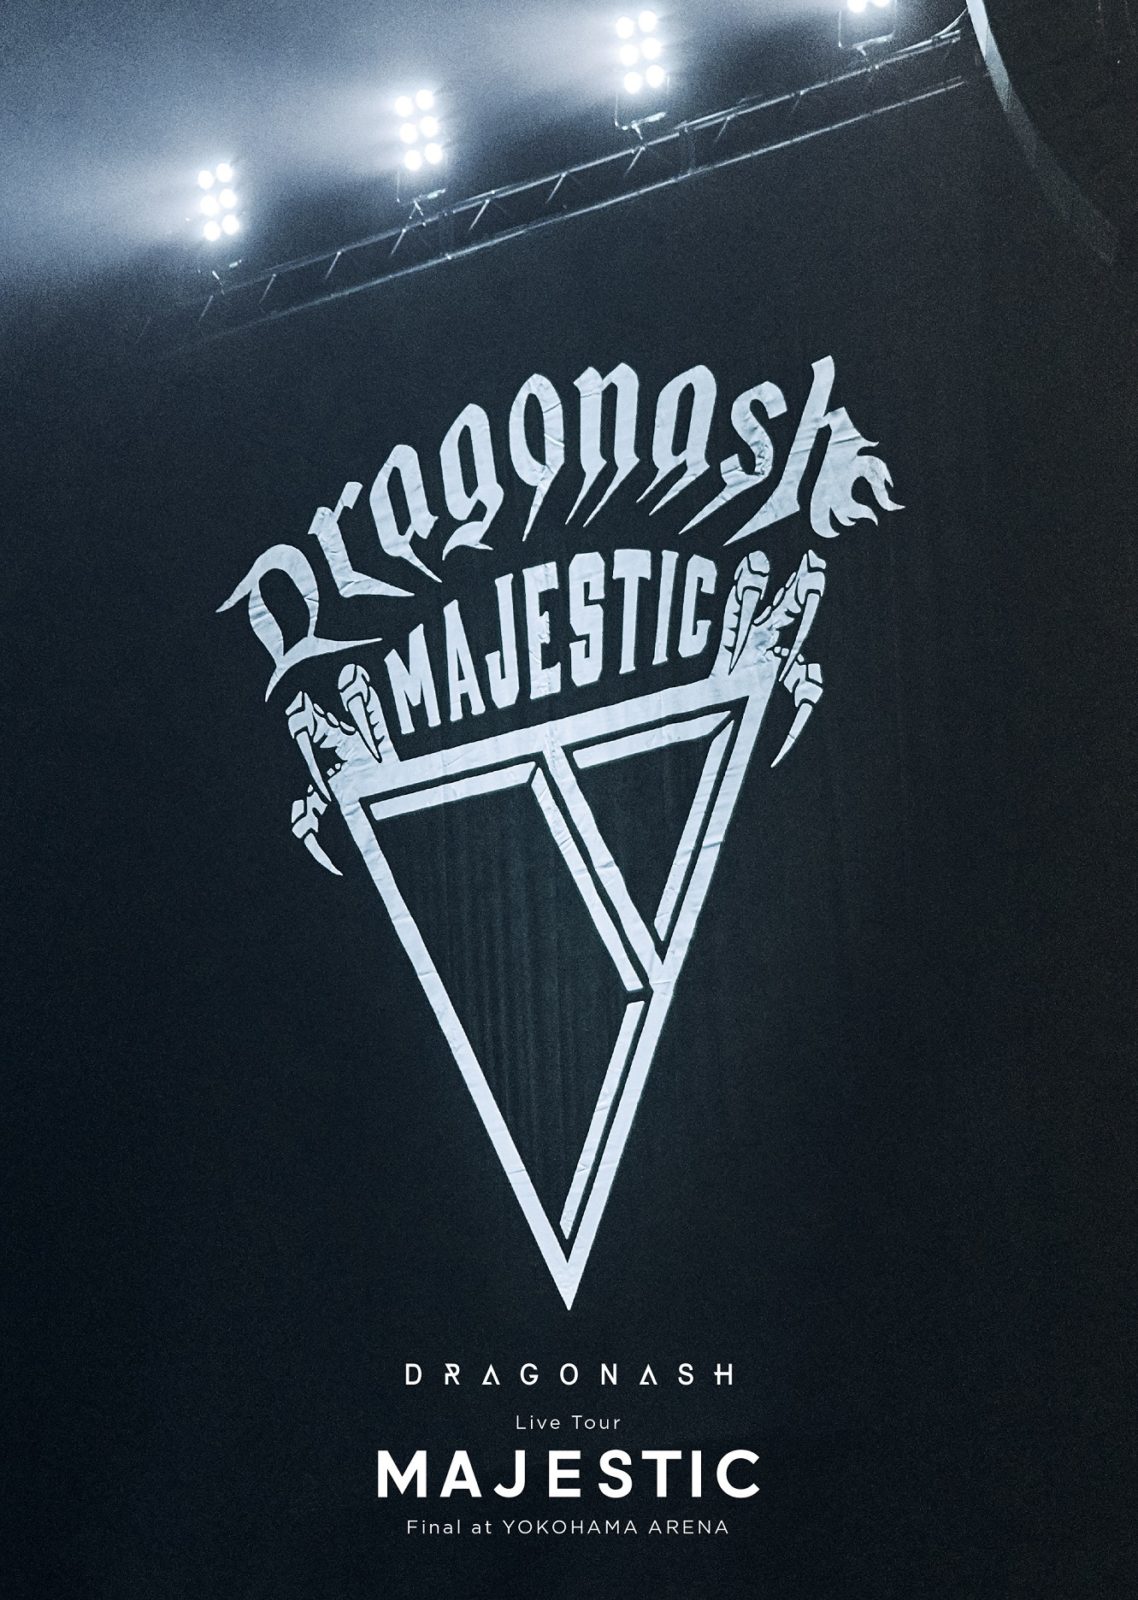 Dragon Ash 20周年イヤーファイナルを飾る映像作品「Live Tour MAJESTIC Final at YOKOHAMA ARENA」の全収録楽曲とジャケット写真を公開